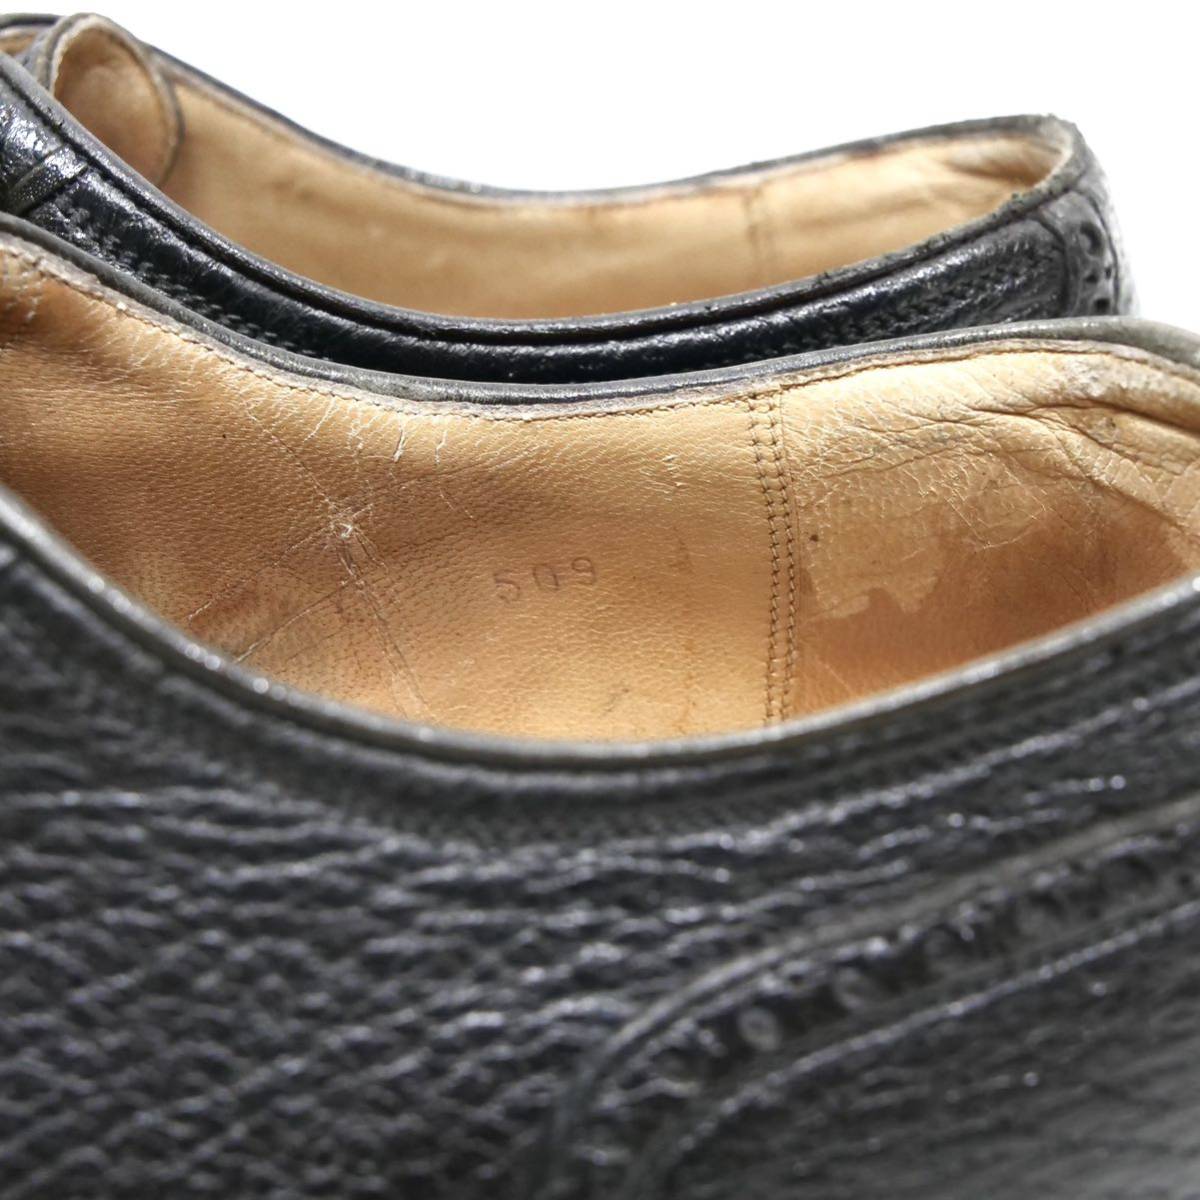 【gravati】グラバティ ブラック 内羽根式フルブローグ UK4.5 23cm前後 ビジネスシューズ メンズ 革靴_画像8